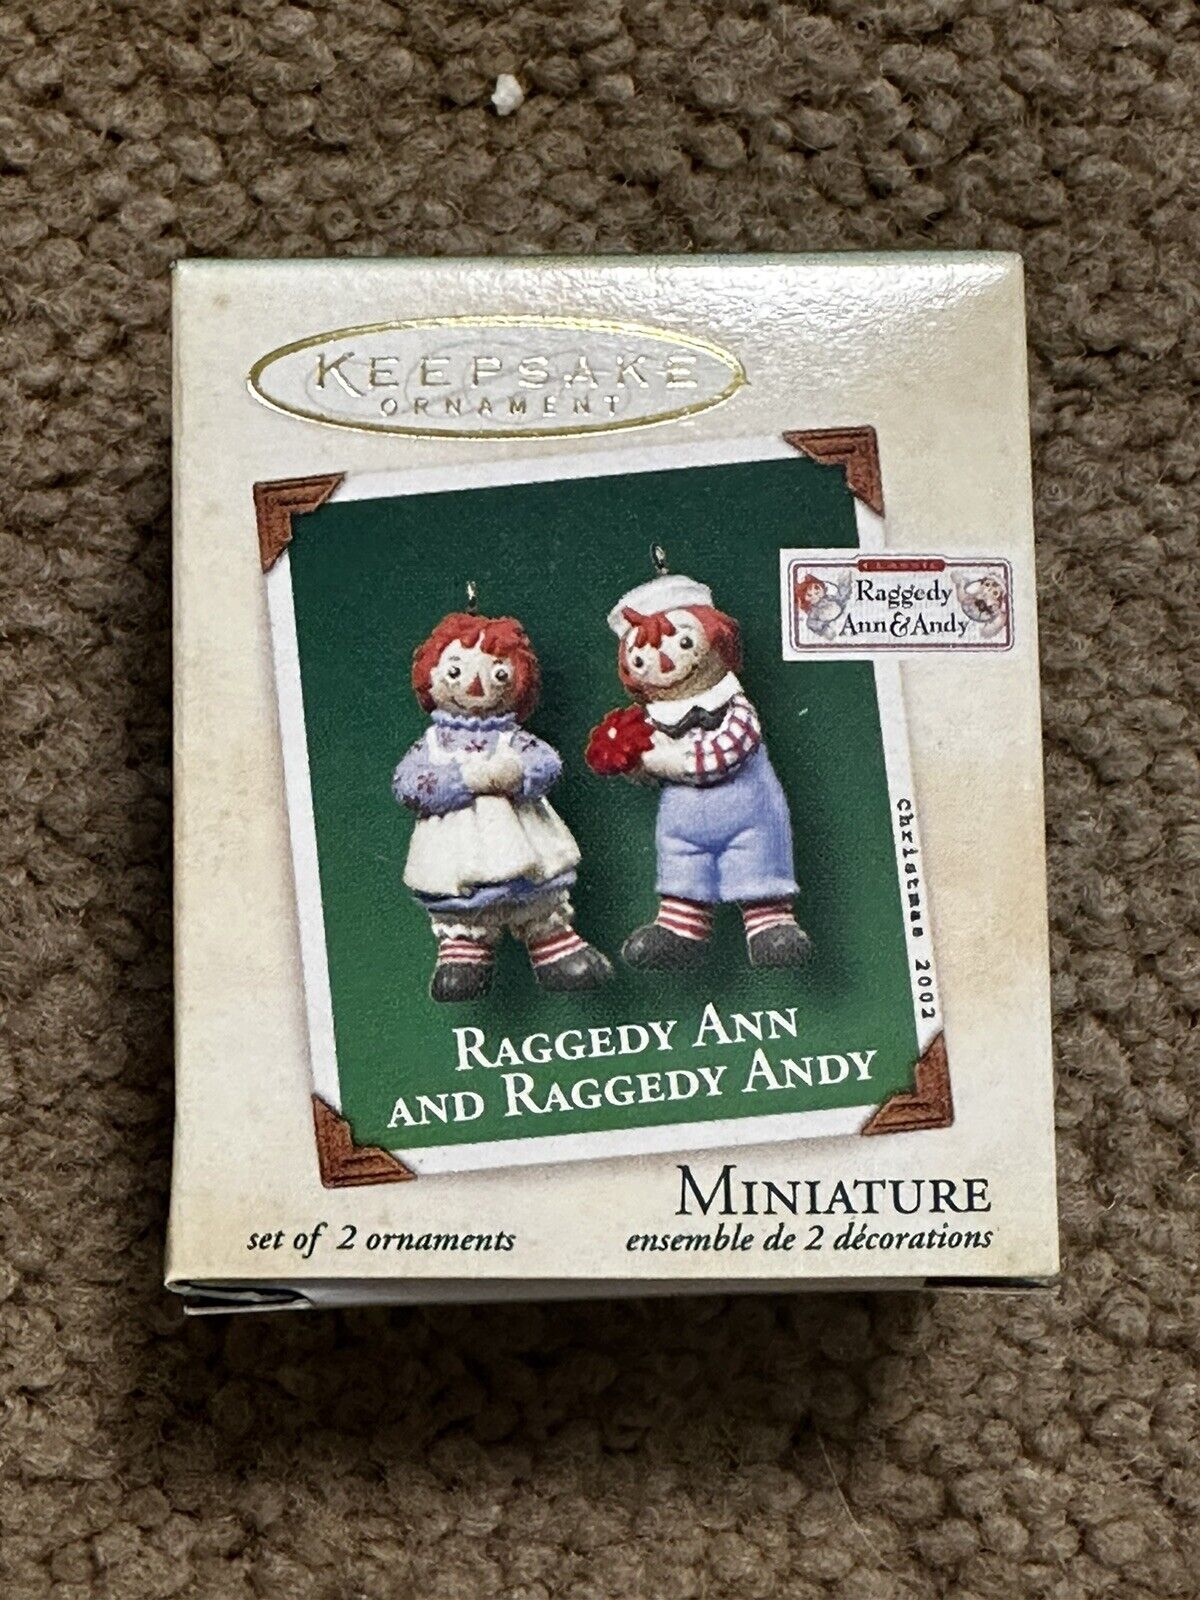 HALLMARK Raggedy Ann and Raggedy Andy Miniature Ornament 2002 NEW